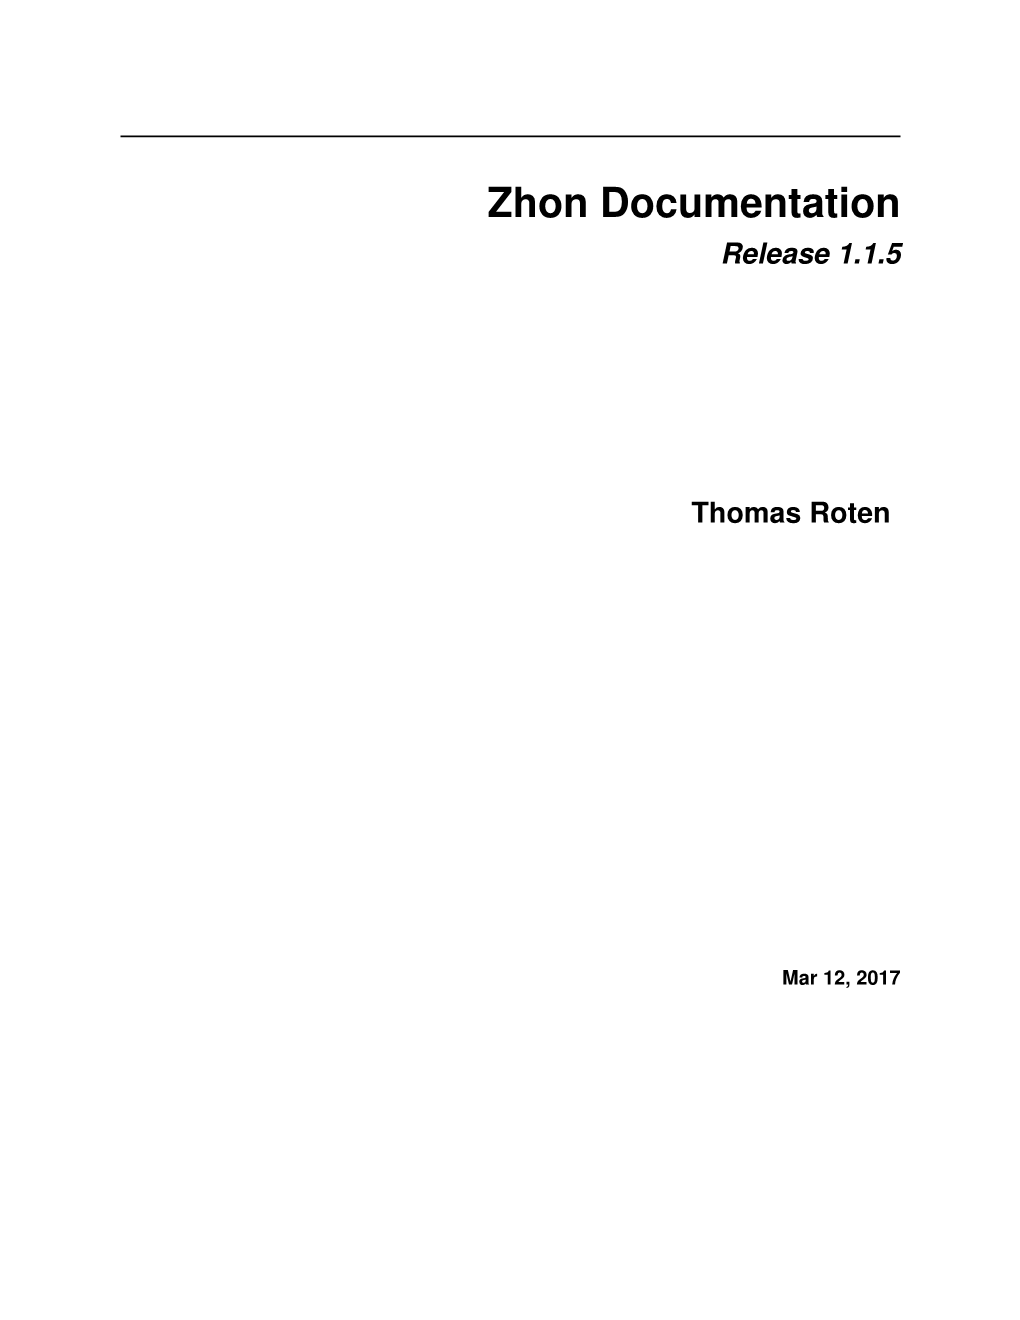 Zhon Documentation Release 1.1.5